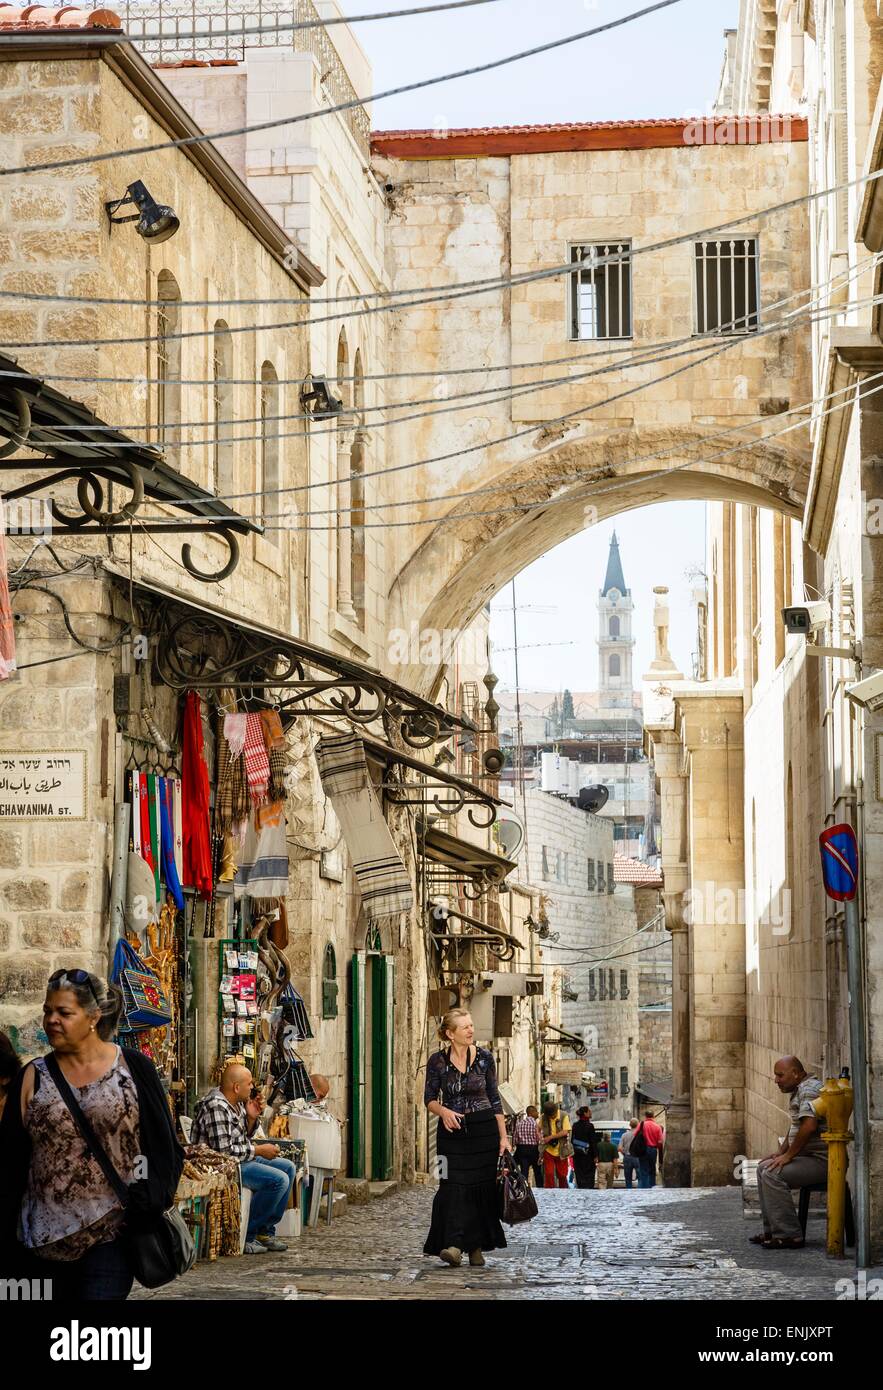 Street scene in Old City, UNESCO World Heritage Site, Jerusalem, Israel, Middle East Stock Photo